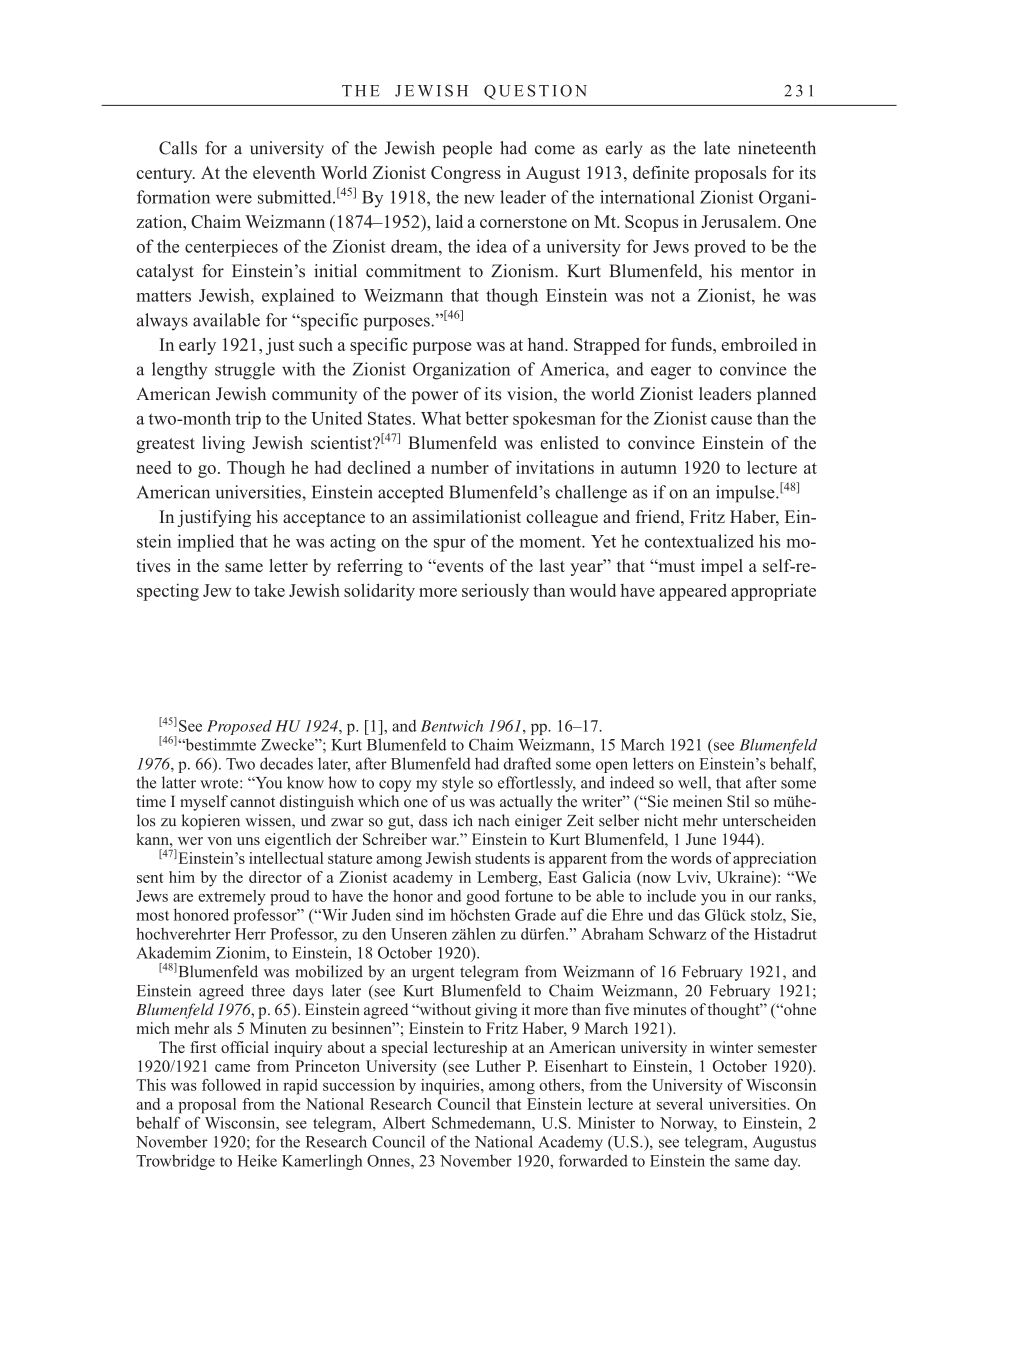 Volume 7: The Berlin Years: Writings, 1918-1921 page 231